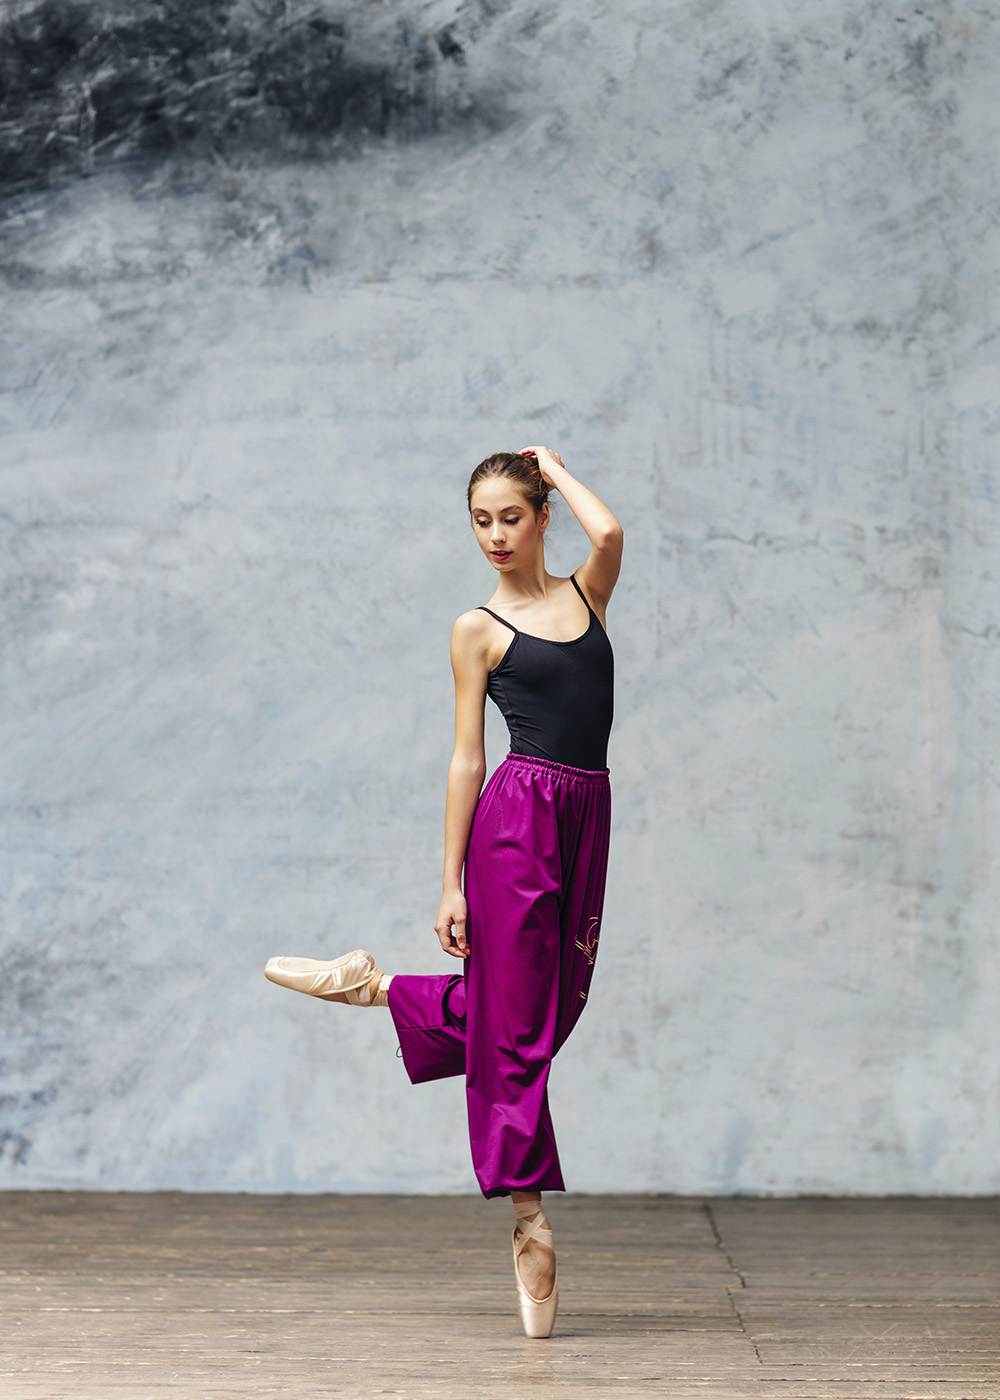 DA2037 GLORIA, Mesh leggings (DA2037)  Grishko® Buy online the best ballet  products. Order now!